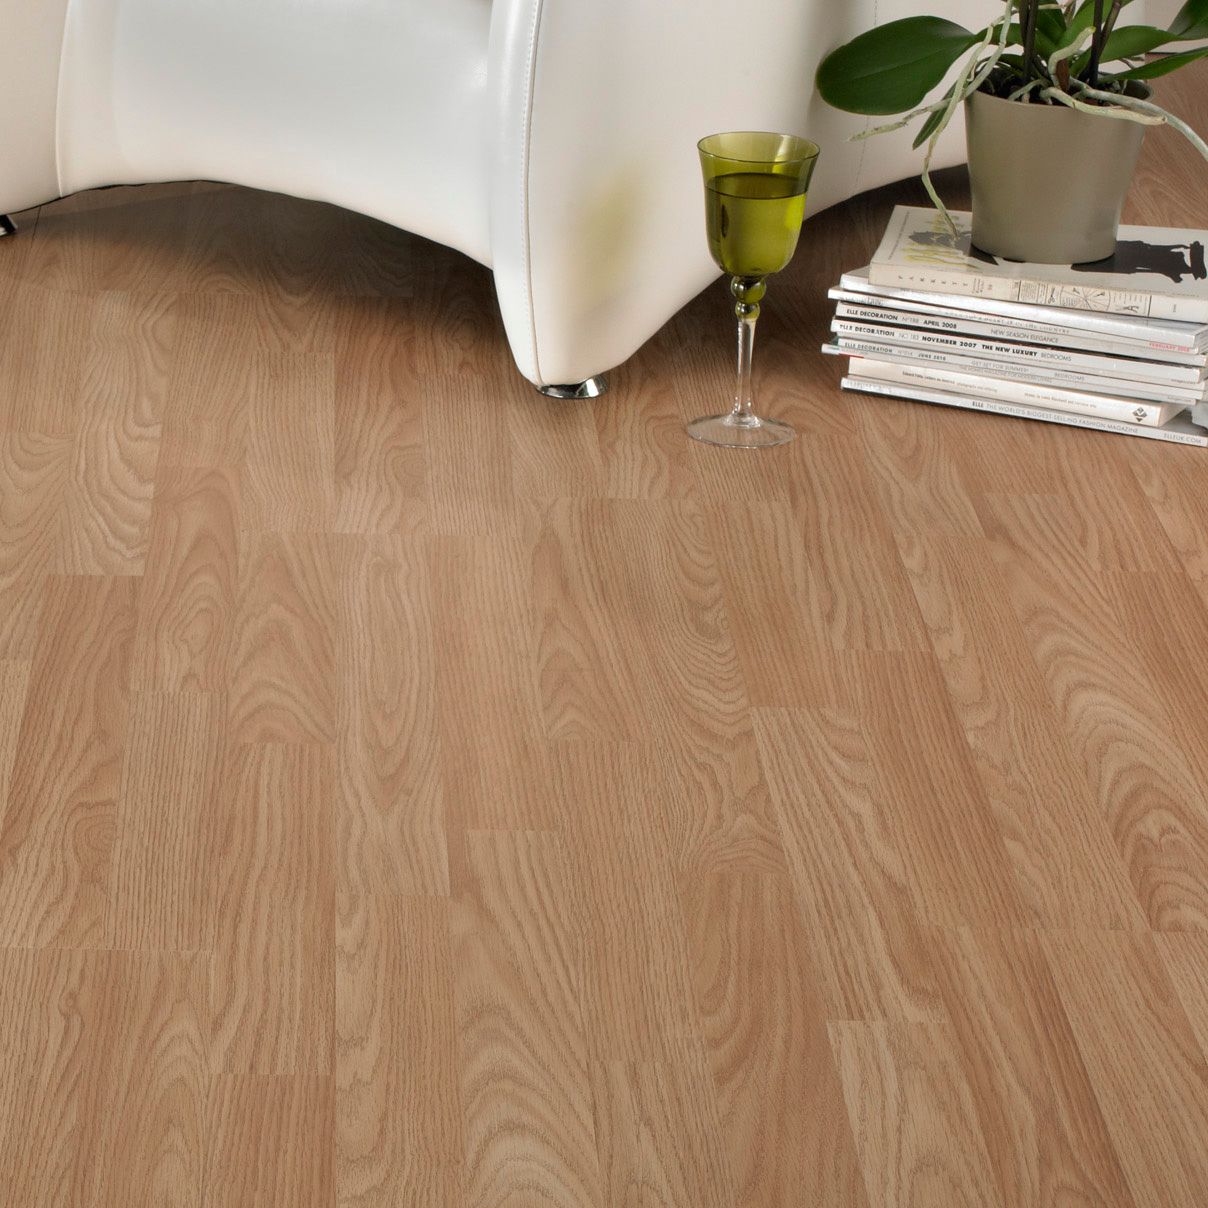 Oak Effect 3 Strip Laminate Flooring, Natural Oak Effect 3 Strip Laminate Flooring